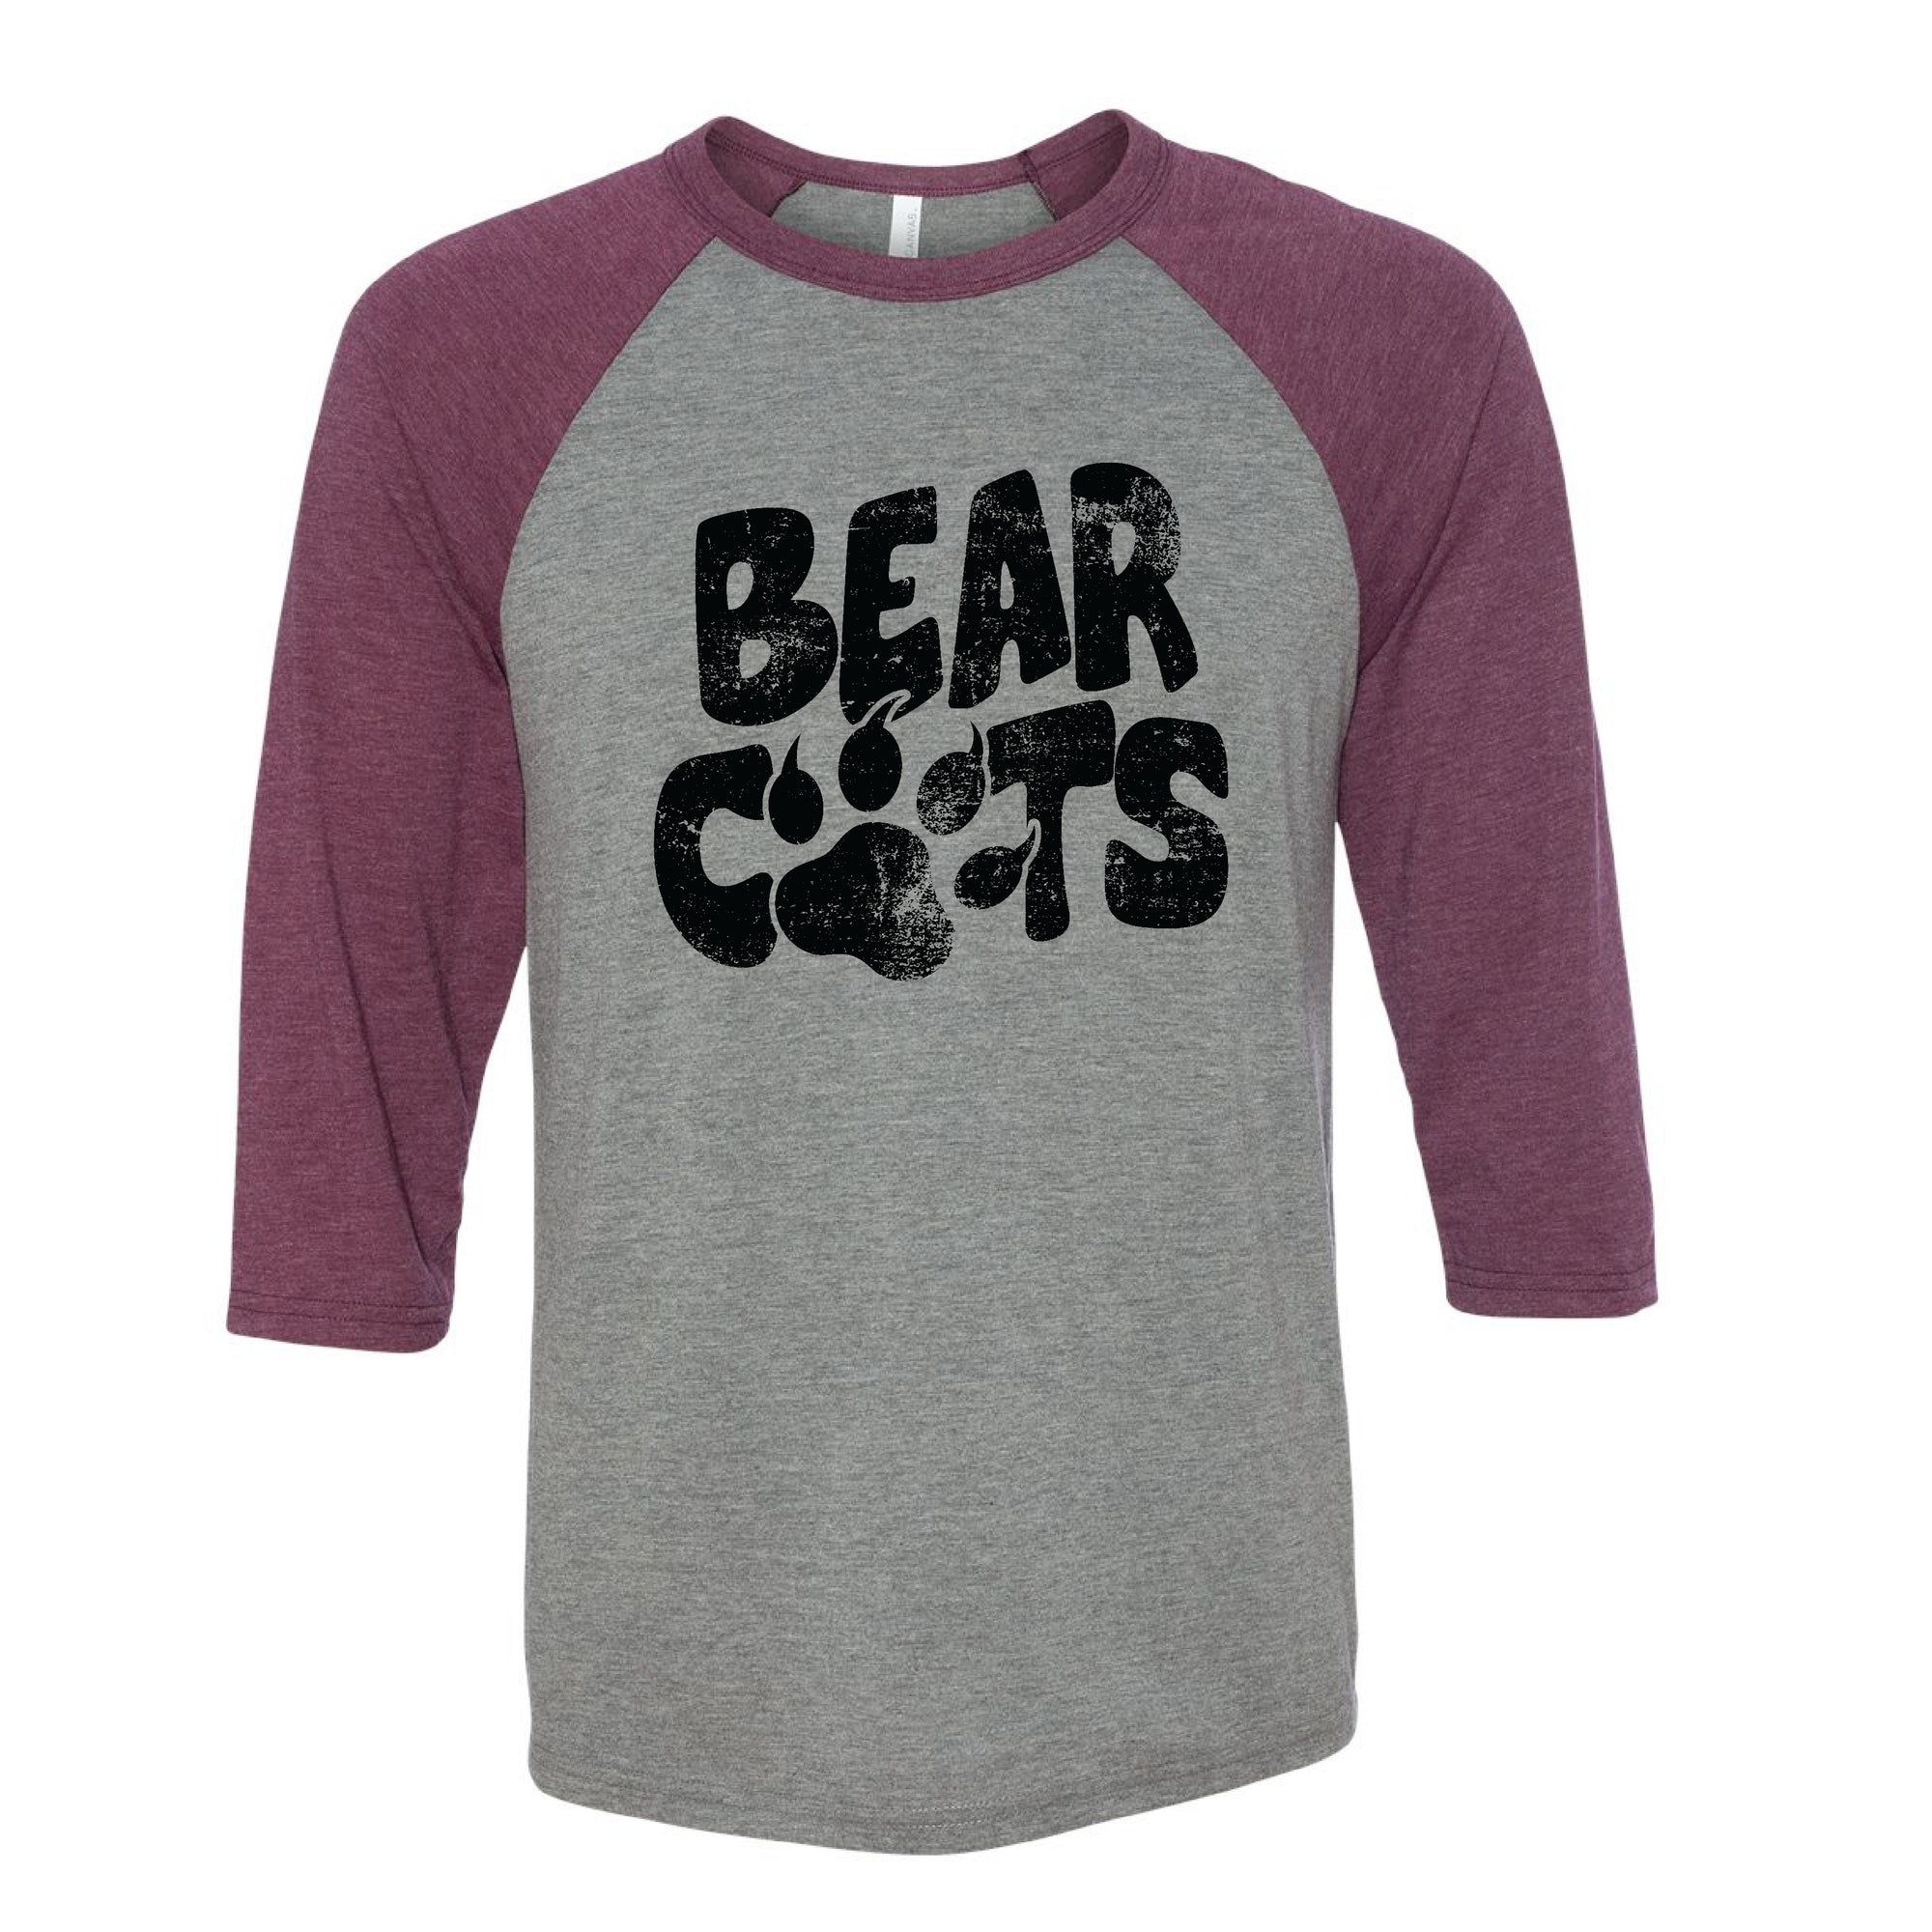 Baseball Sleeve Bearcats Graphic Tee